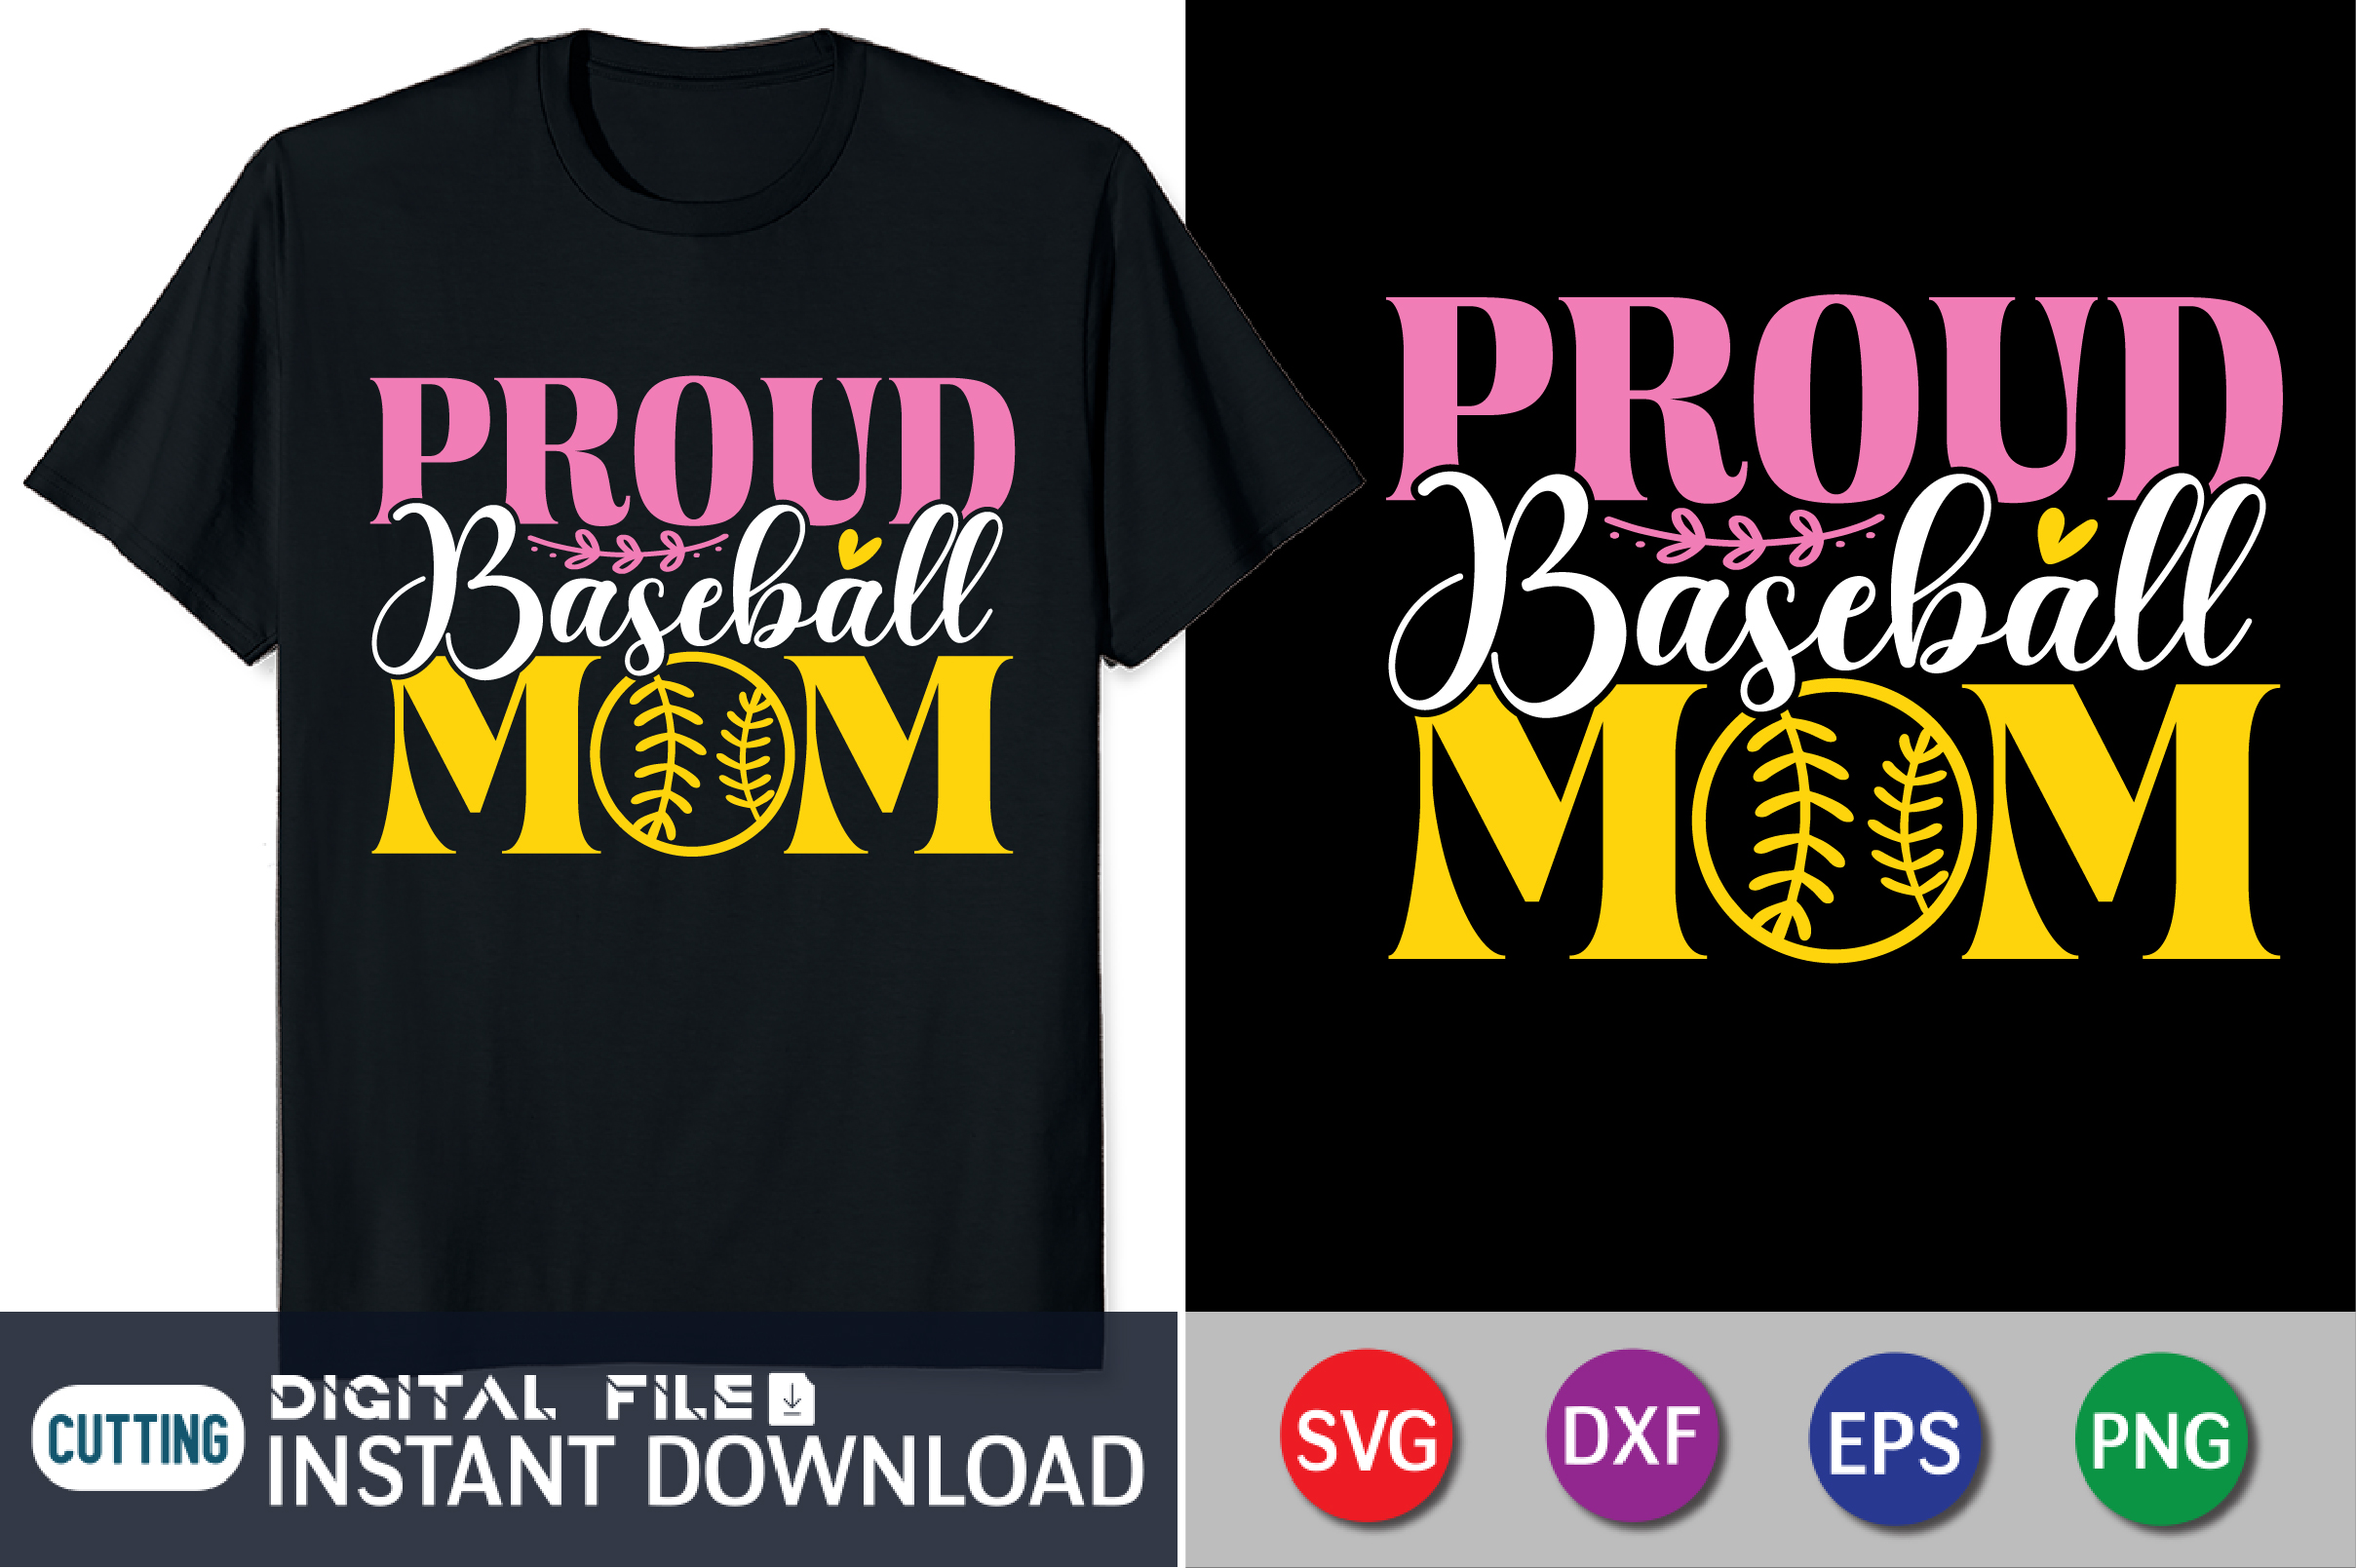 Baseball Team SVG Logo, Baseball Team SVG Cut Logo, AI, EPS, CDR Files